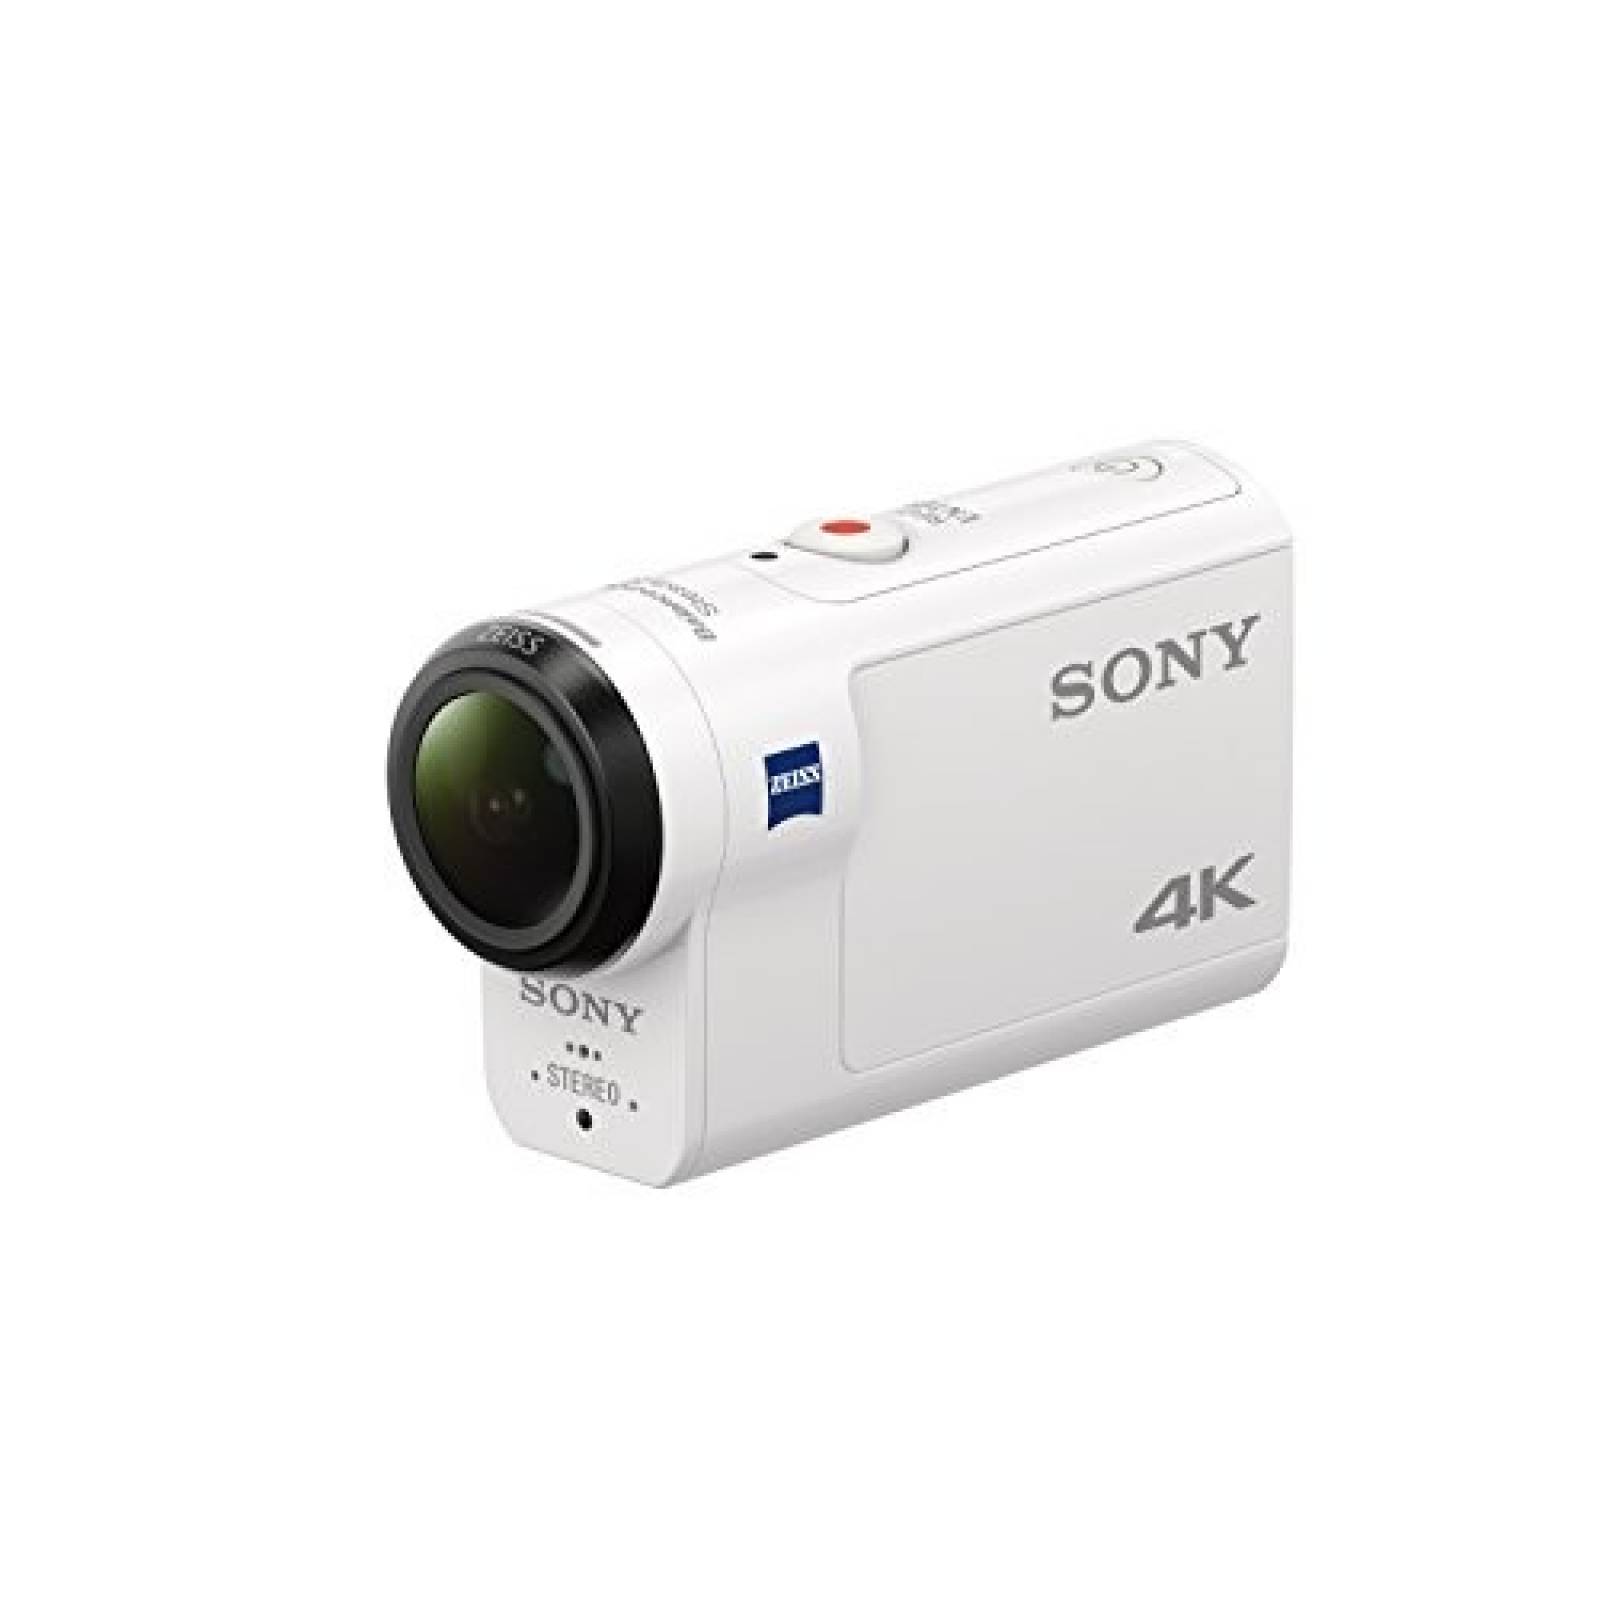 Videocámara Sony FDRX3000 4K sumergible hasta 6m -Blanco